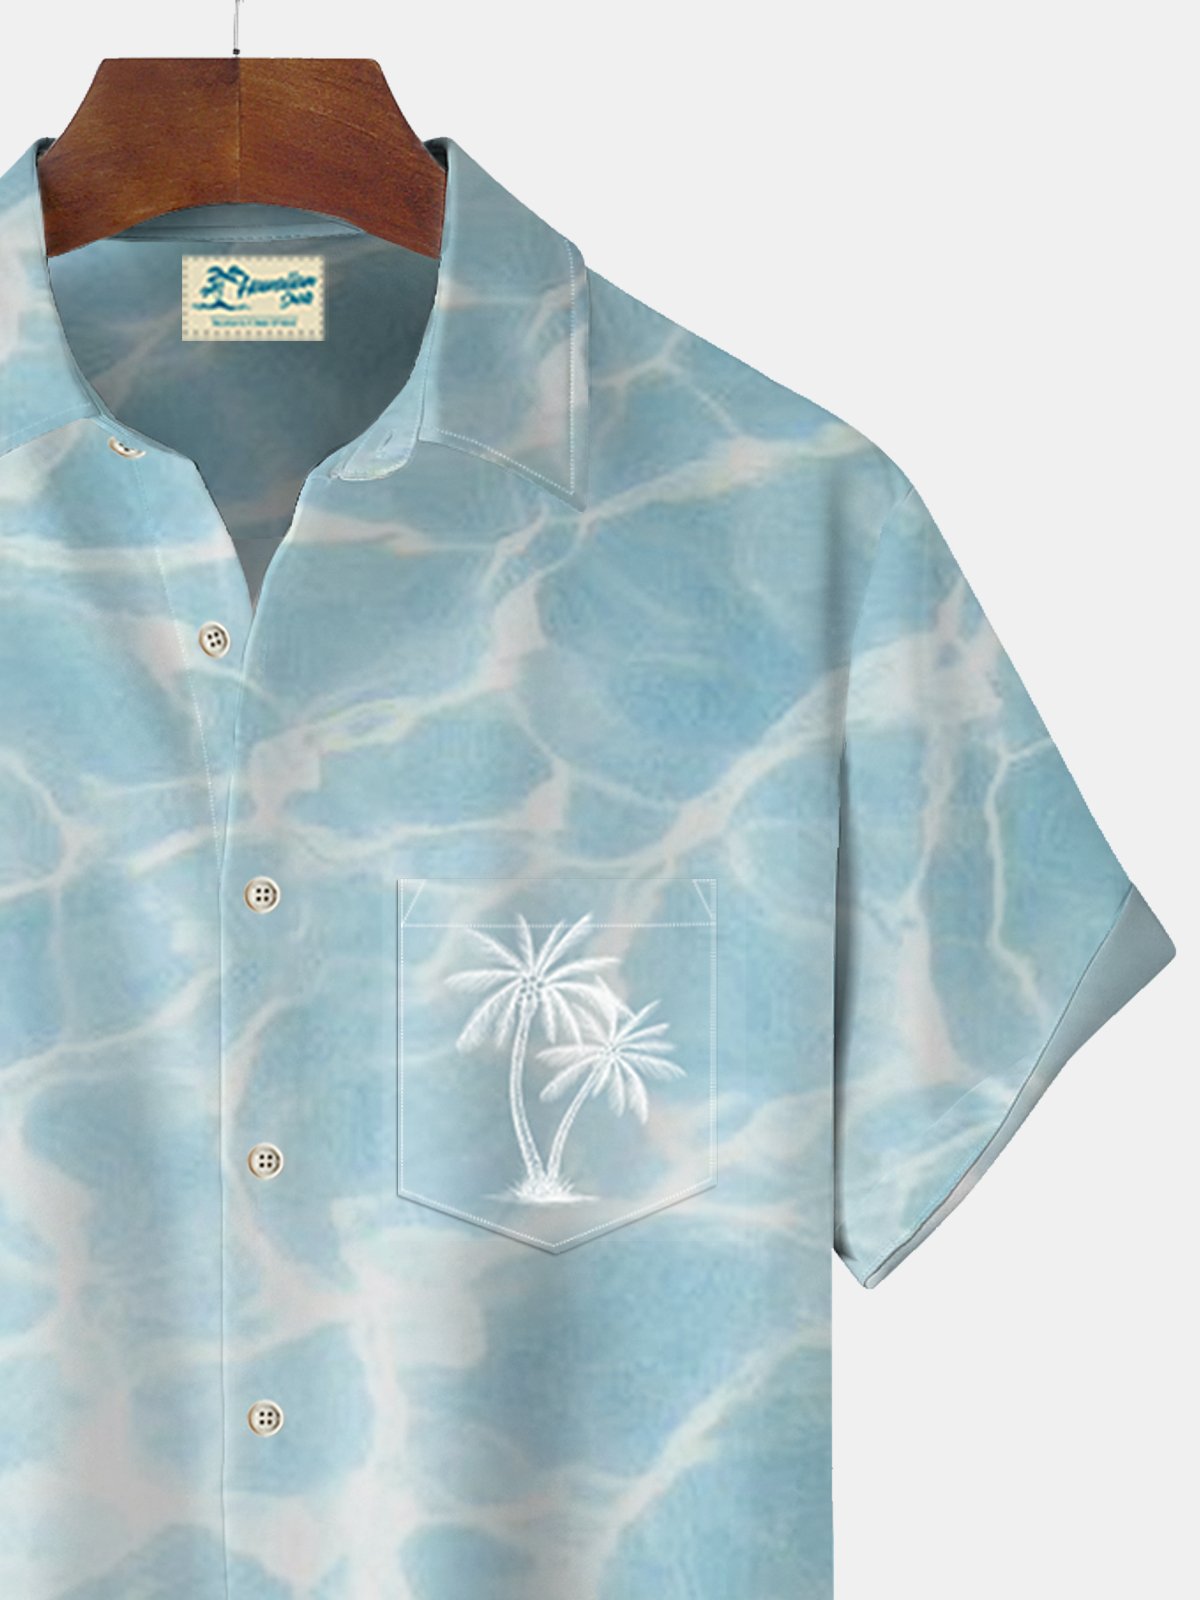 Royaura Water Ripple Print Beach Men's Hawaiian Oversized Shirt with Pockets Wrinkle Free Shirt